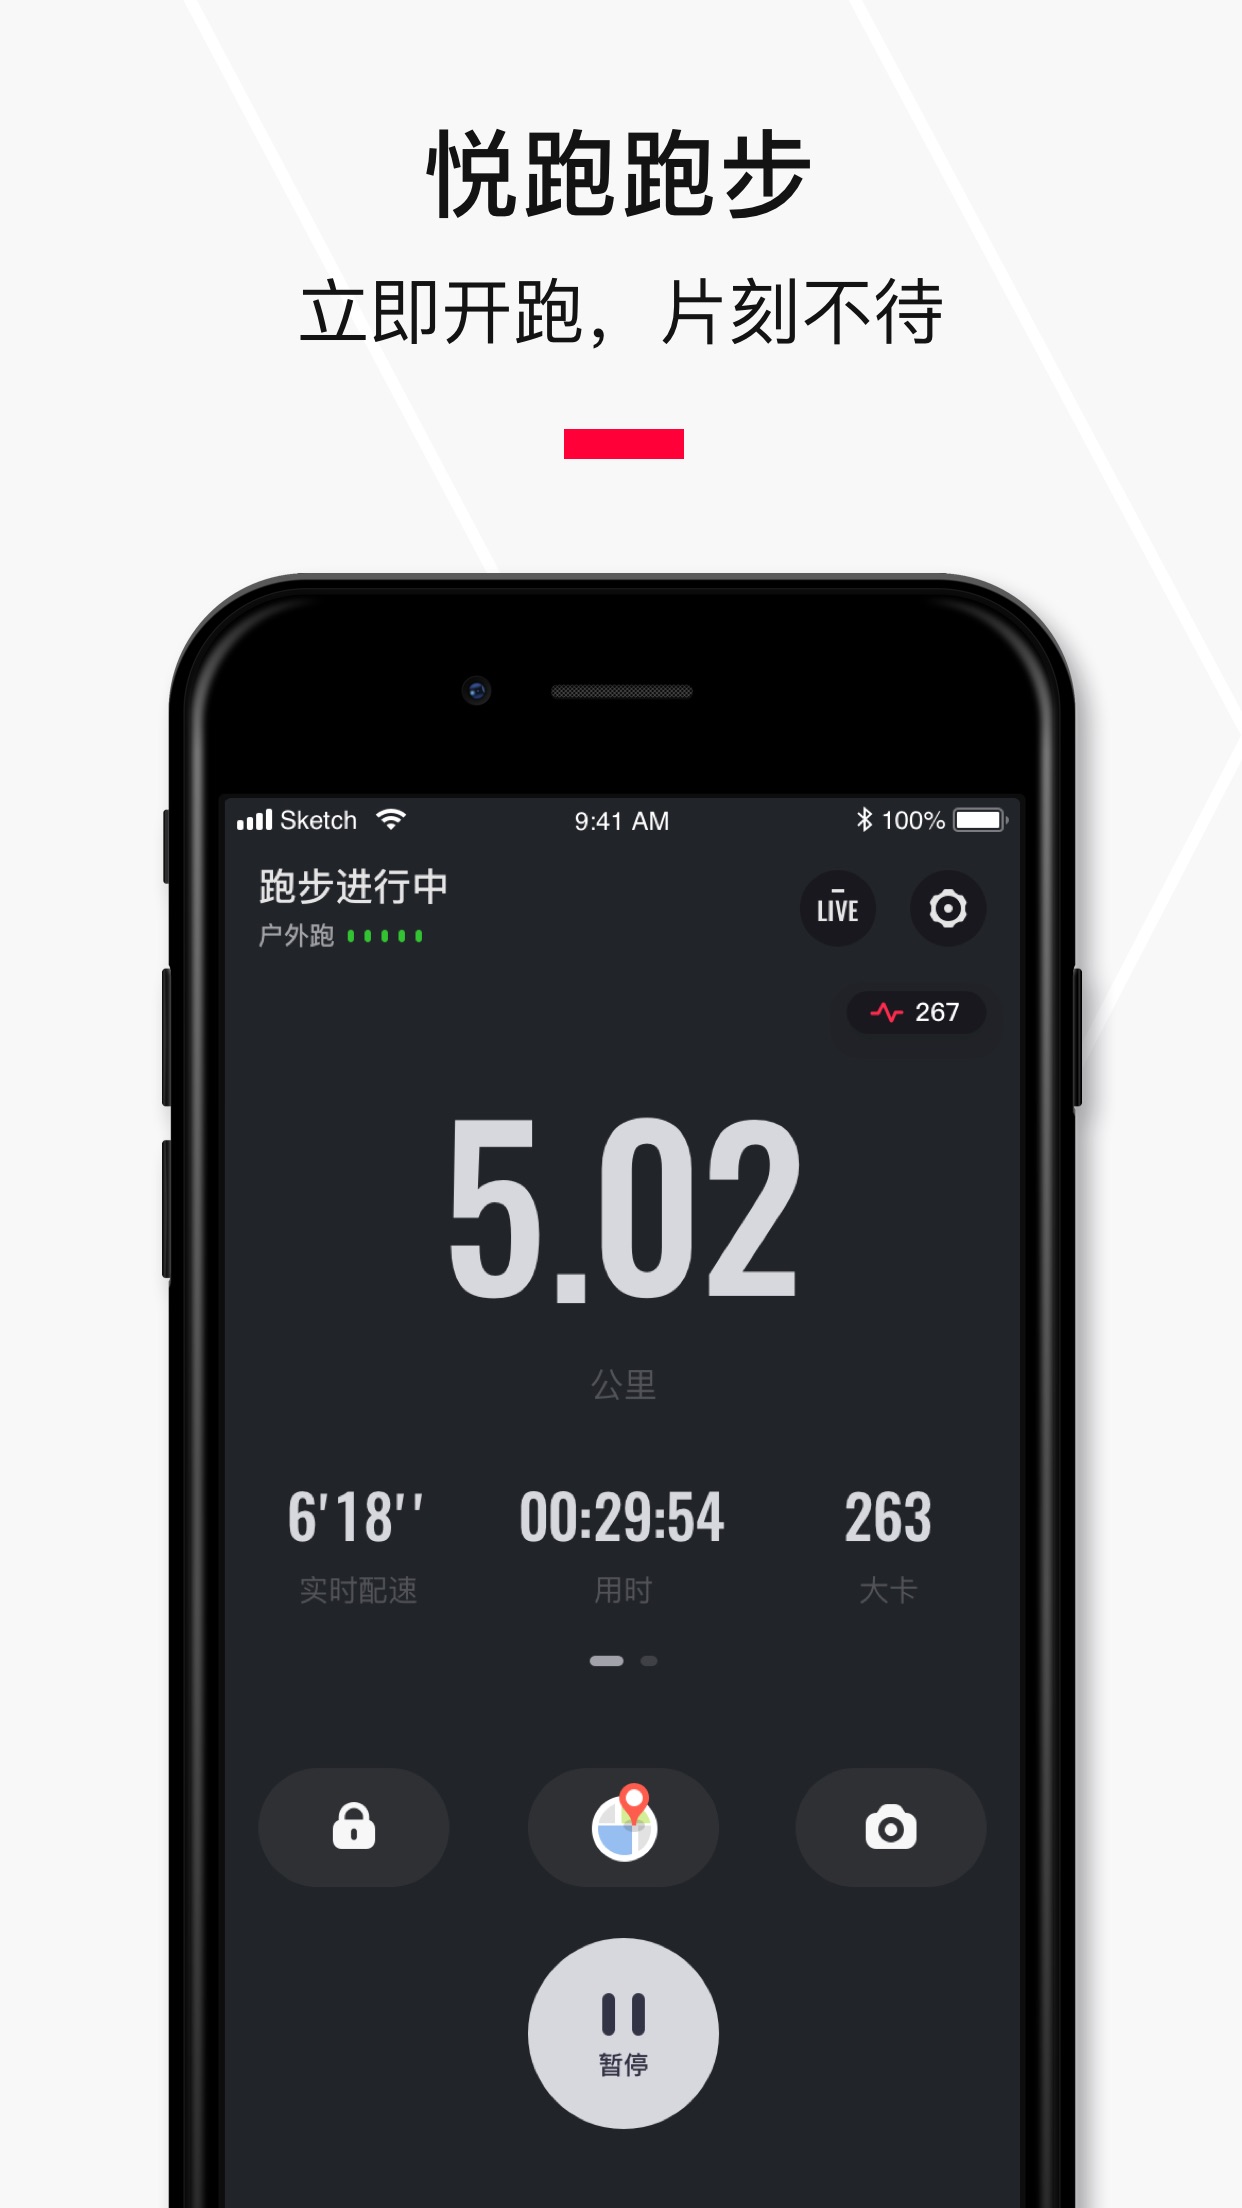 悅跑圈 - 跑步運動記錄專業軟件 aso report and app store data